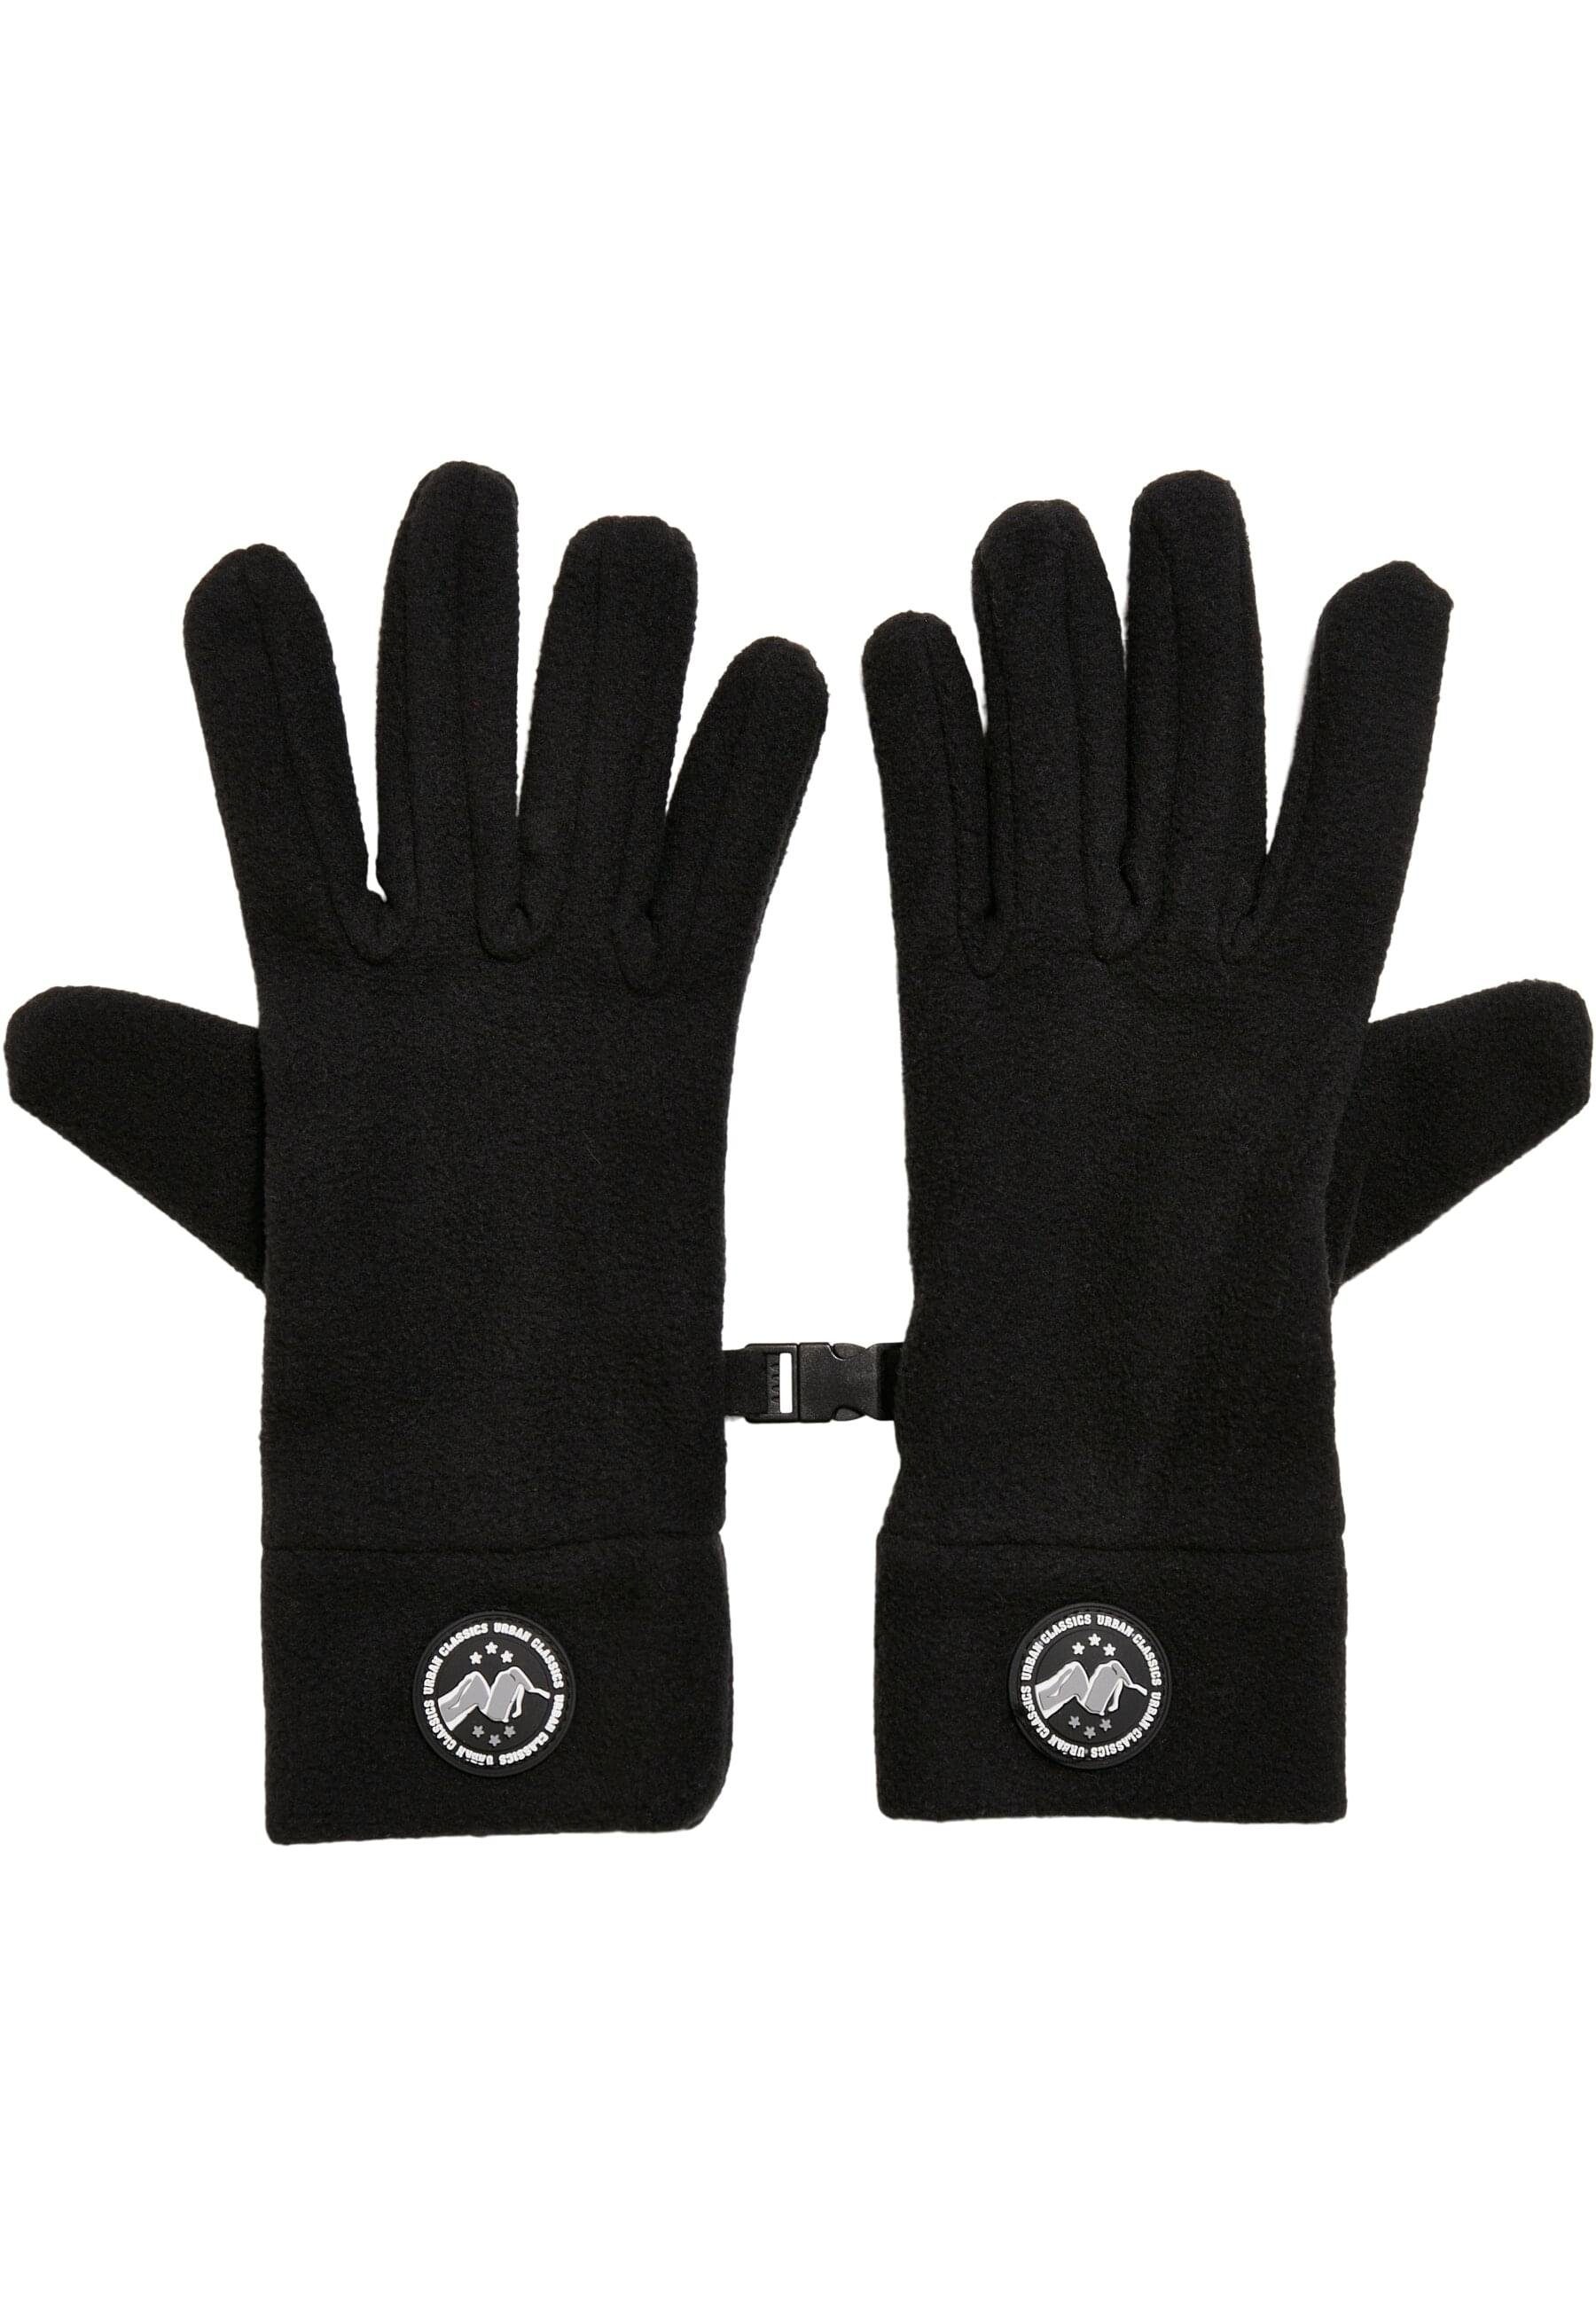 Gloves Hiking Polar Fleece URBAN Baumwollhandschuhe Unisex CLASSICS